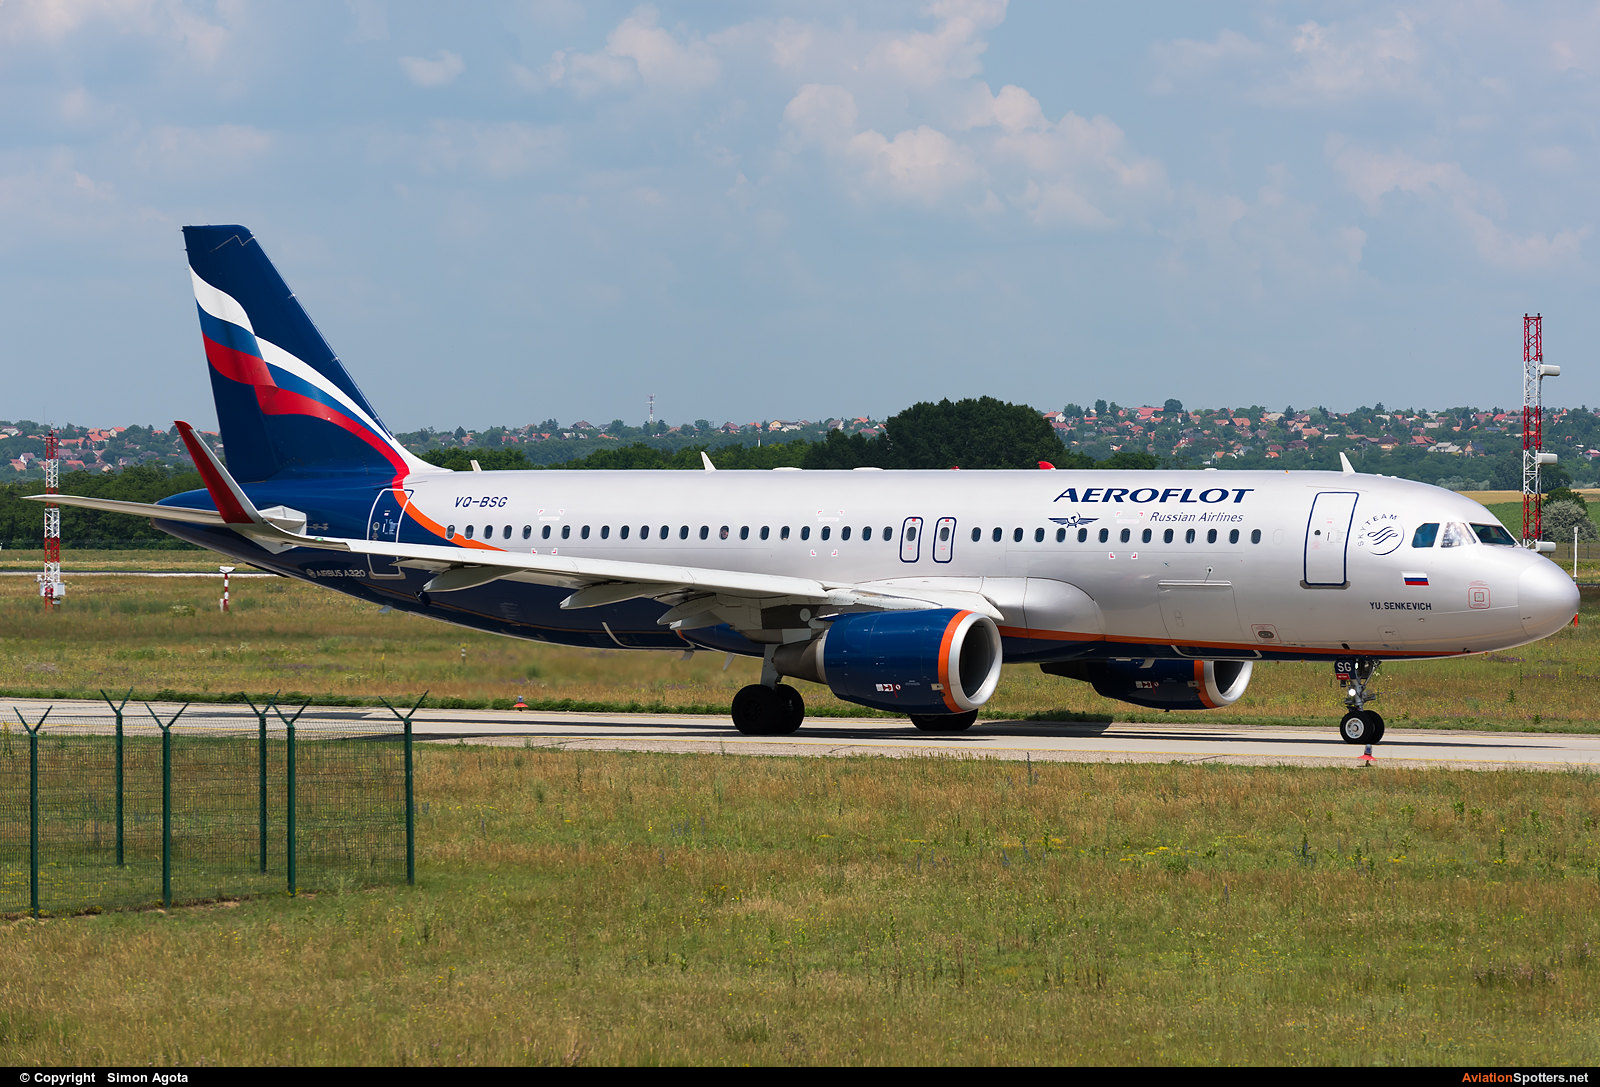 Aeroflot  -  A320-214  (VQ-BSG) By Simon Agota (goti80)